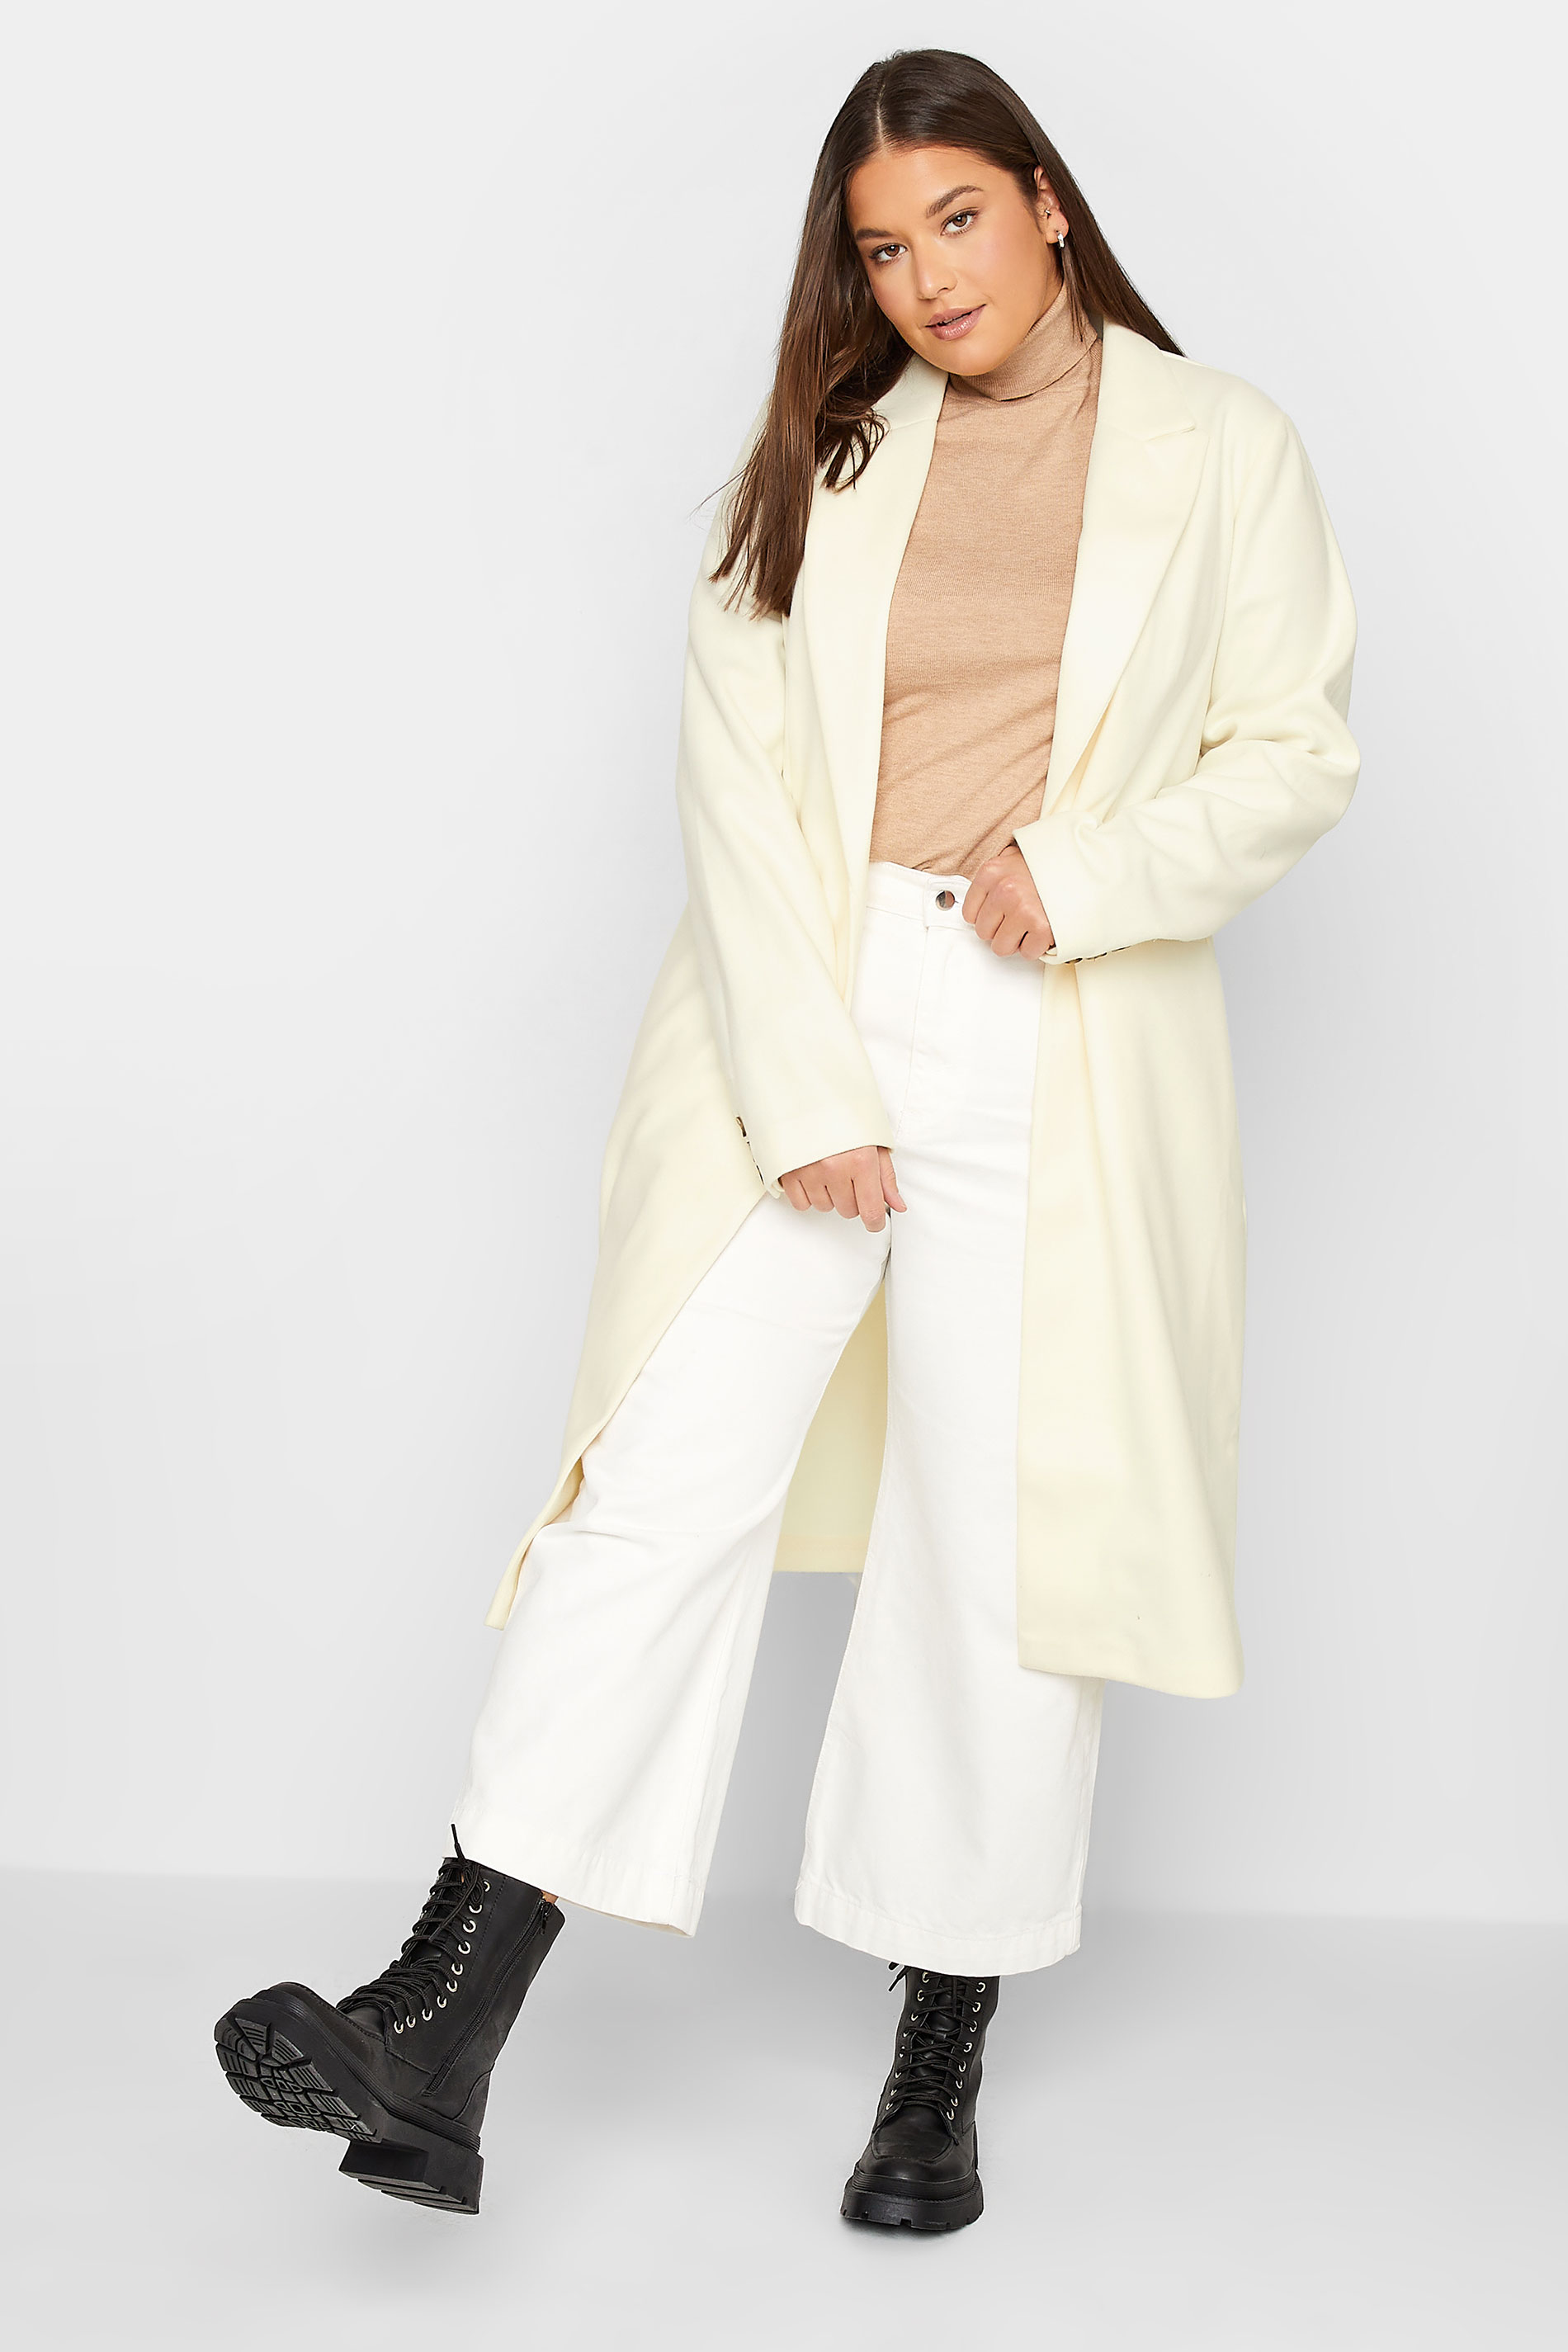 LTS Tall Women's Ivory White Midi Formal Coat | Long Tall Sally 2